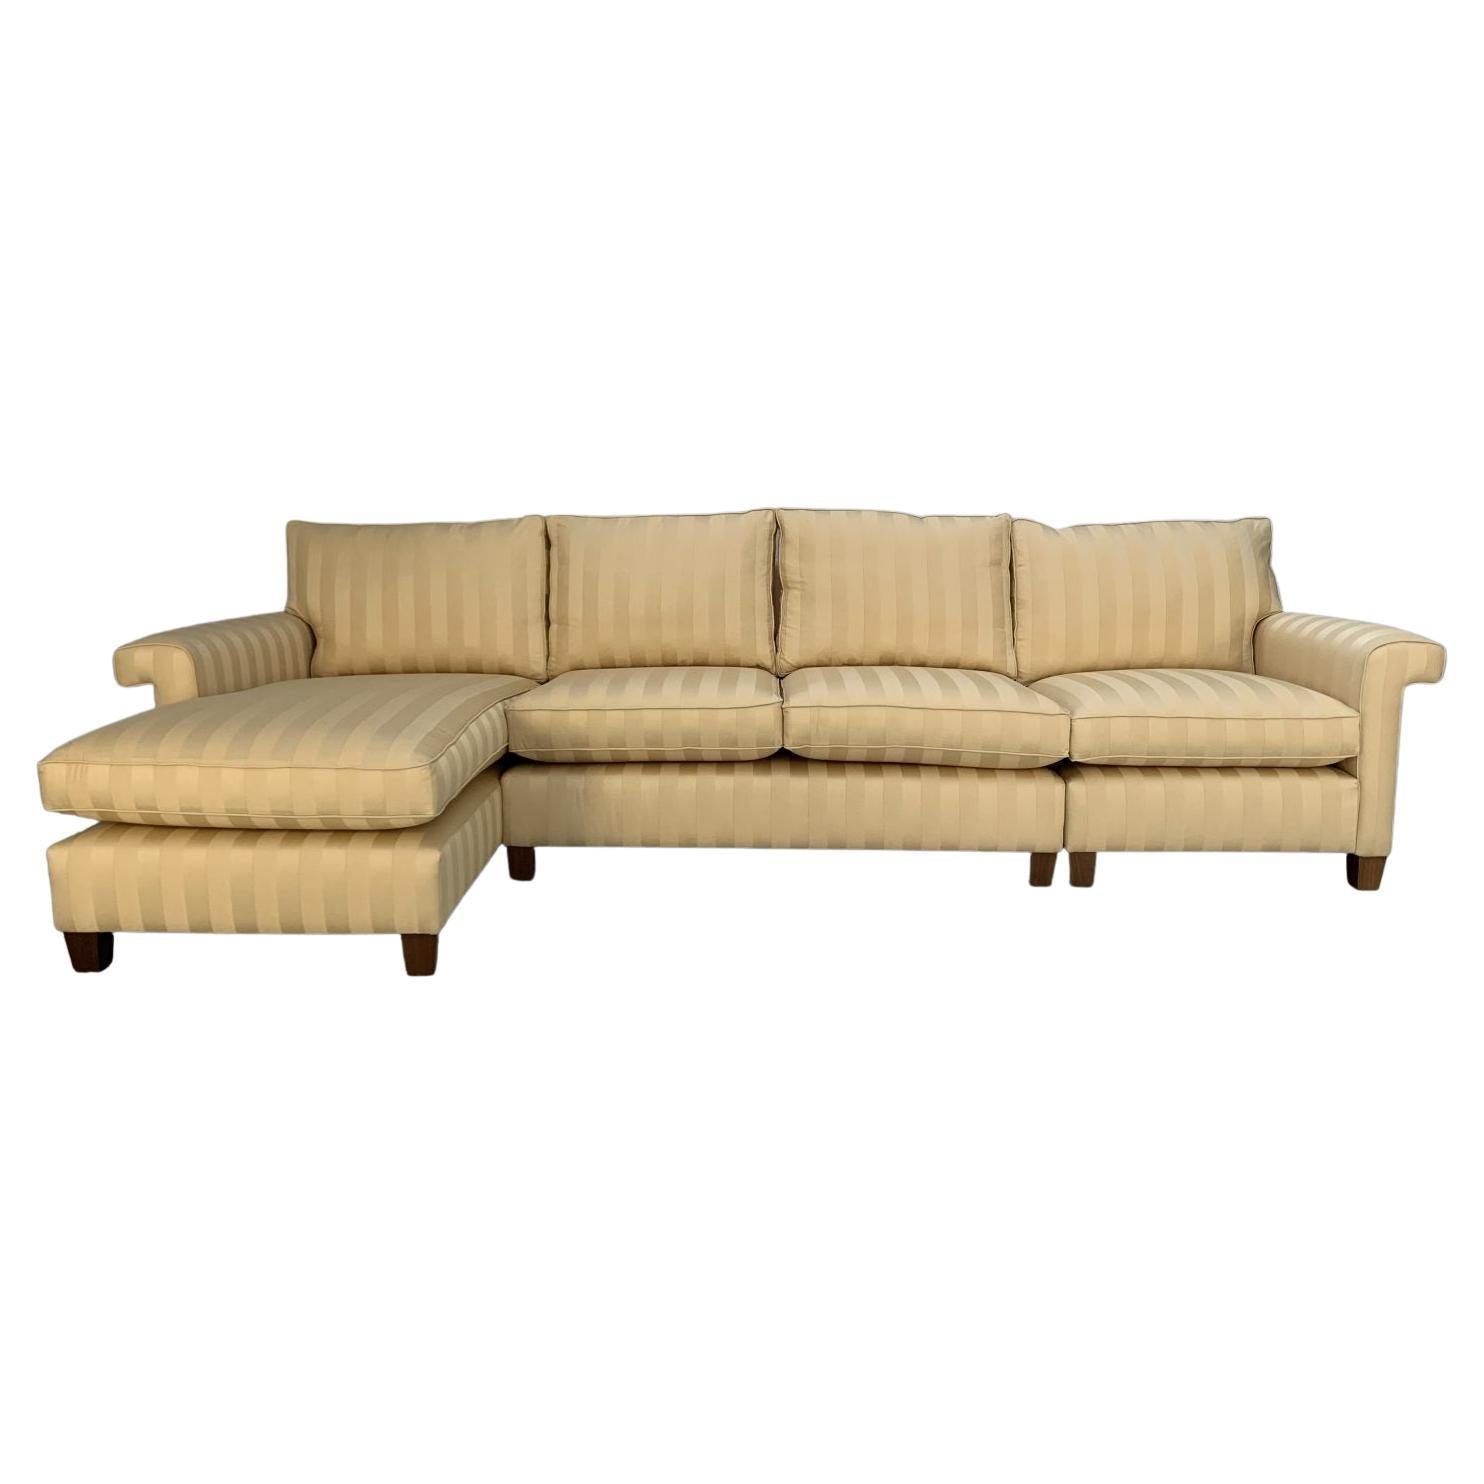 Duresta “Haywood” 4-Seat L-Shape Sofa – In Gold Stripe Fabric For Sale